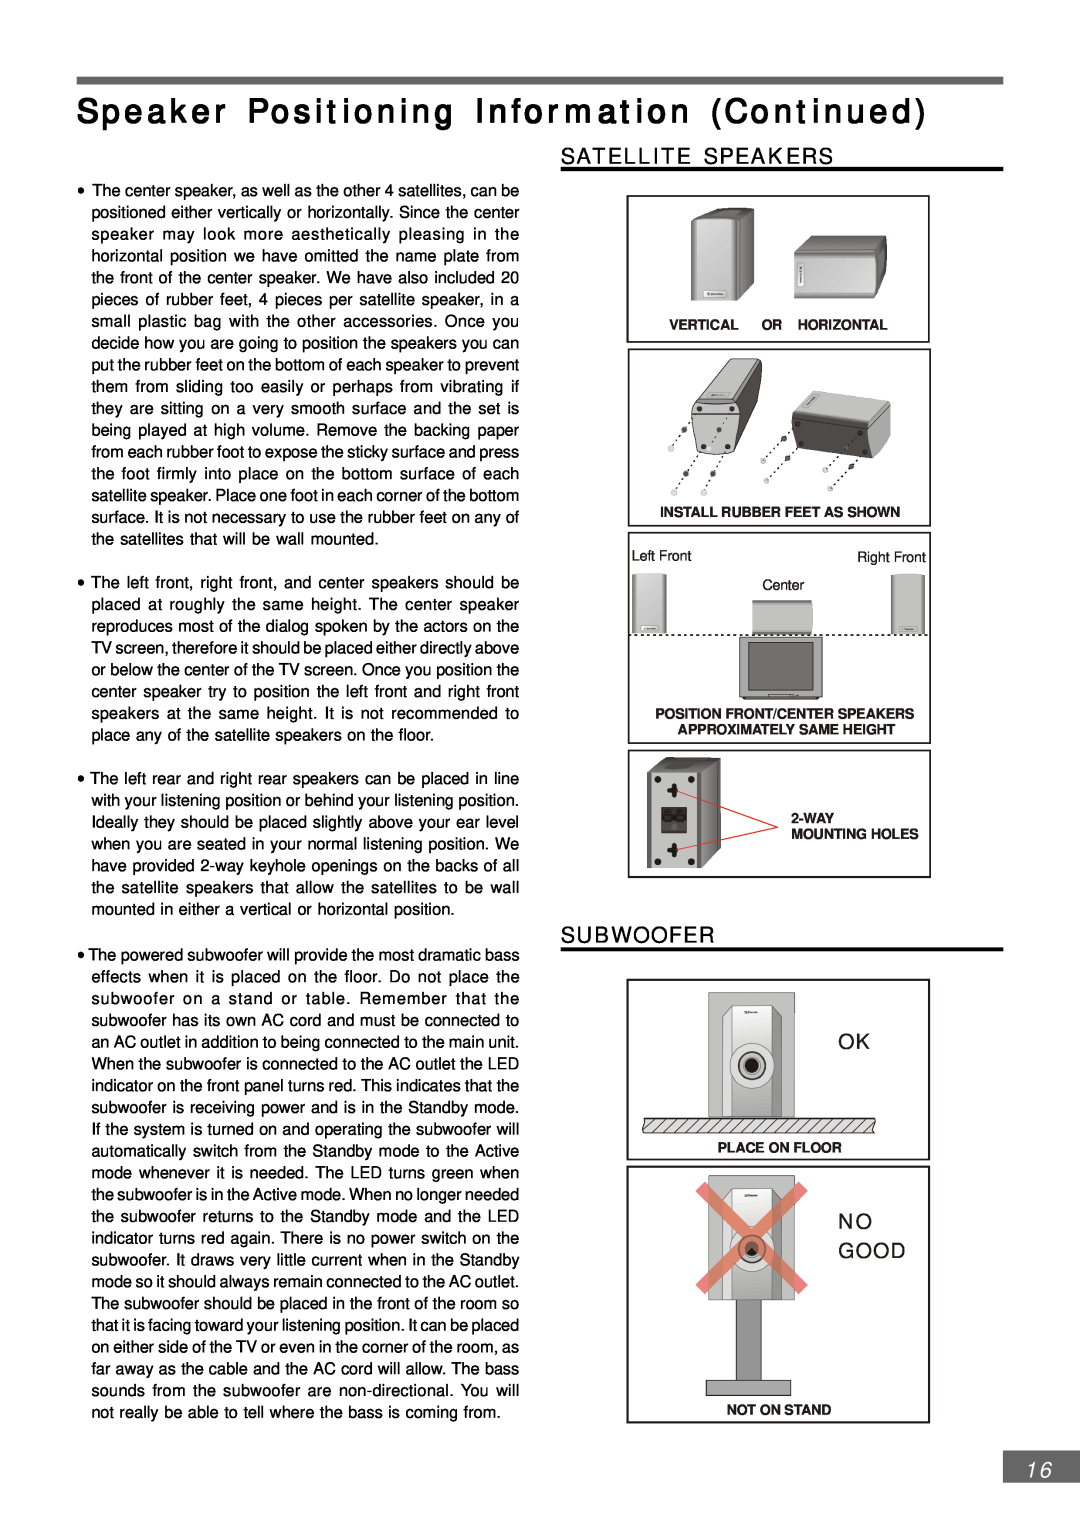 Emerson AV301 owner manual Speaker Positioning Information Continued, Satellite Speakers, Subwoofer, No Good 